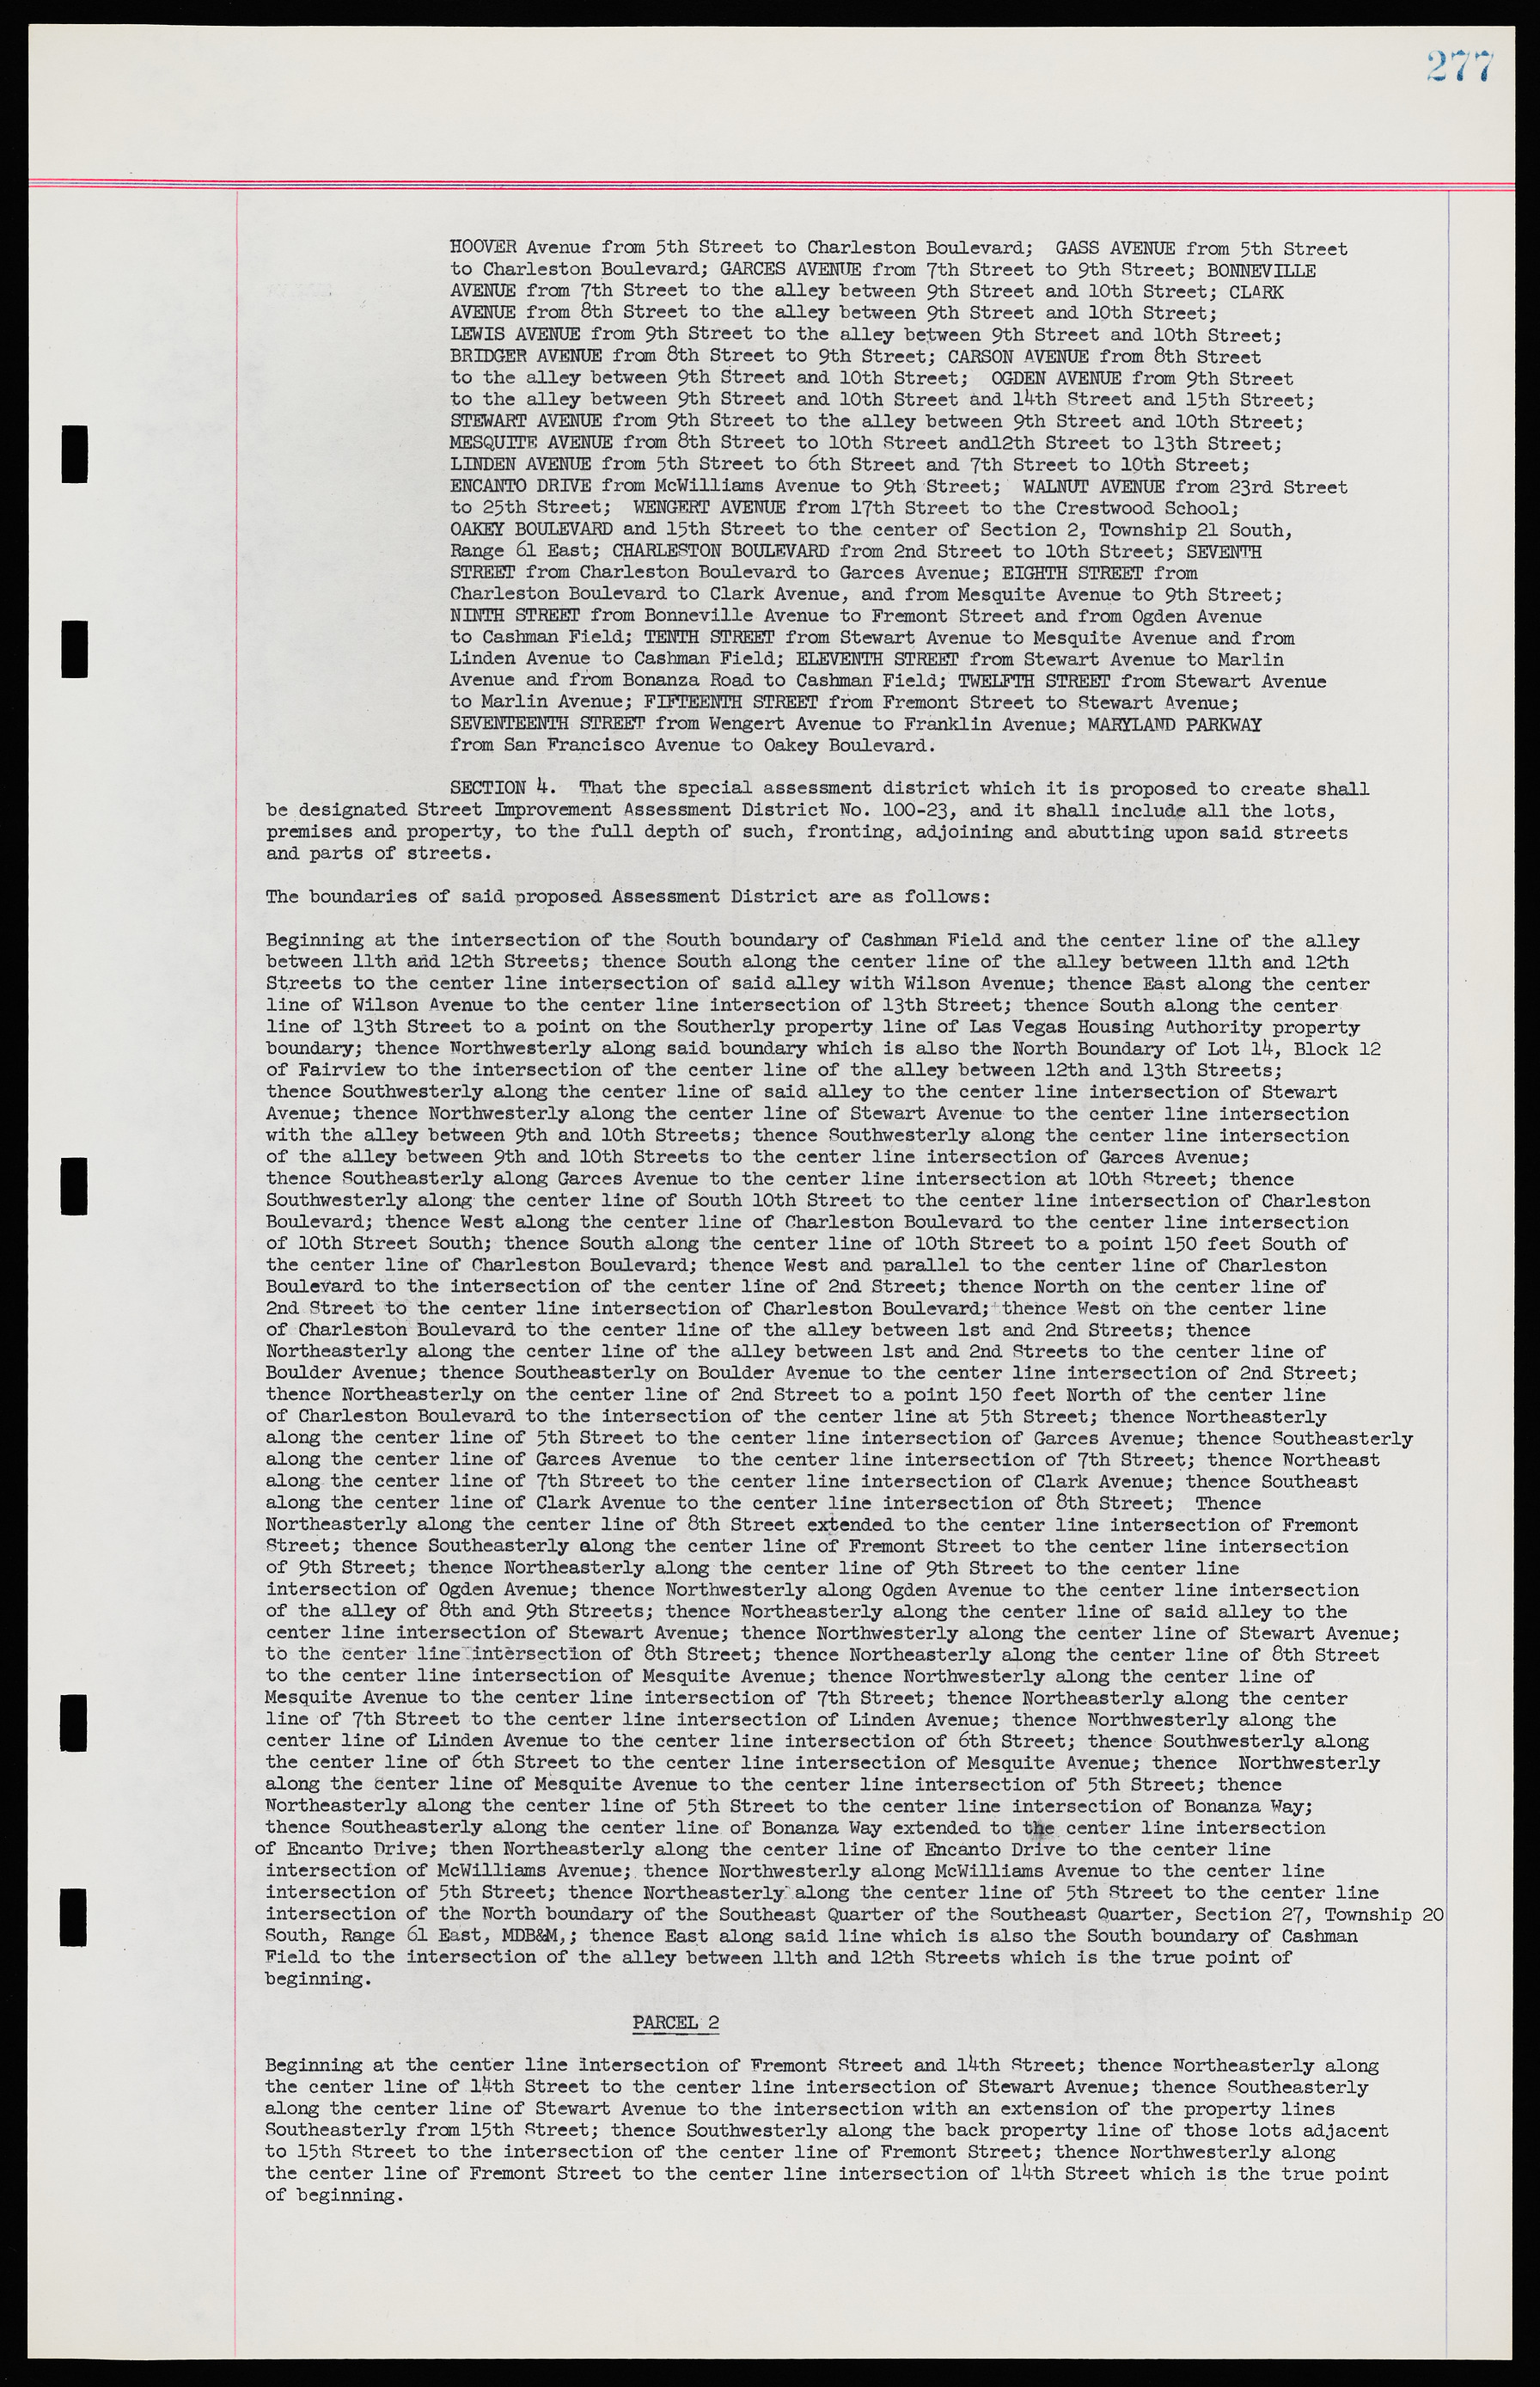 Las Vegas City Ordinances, November 13, 1950 to August 6, 1958, lvc000015-285